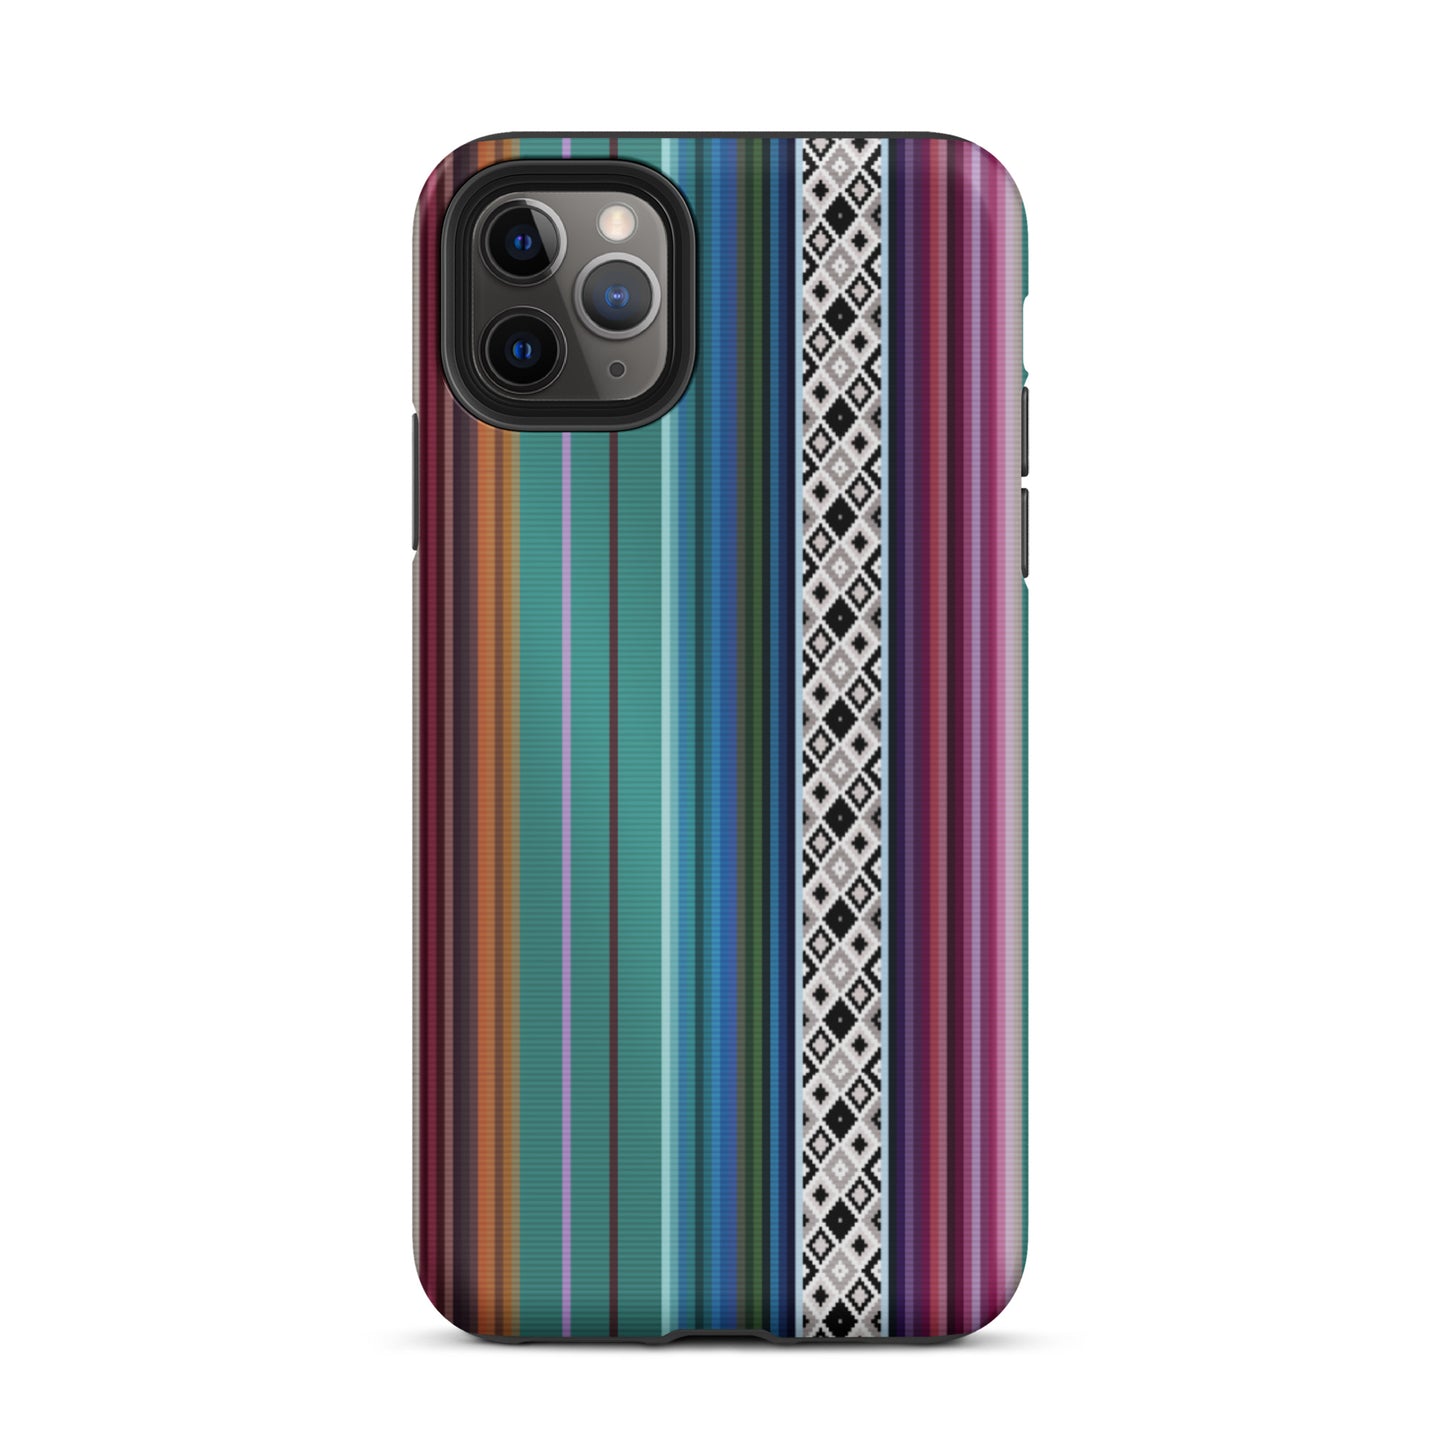 Mexican Aztec Tough iPhone 11 Pro Max case